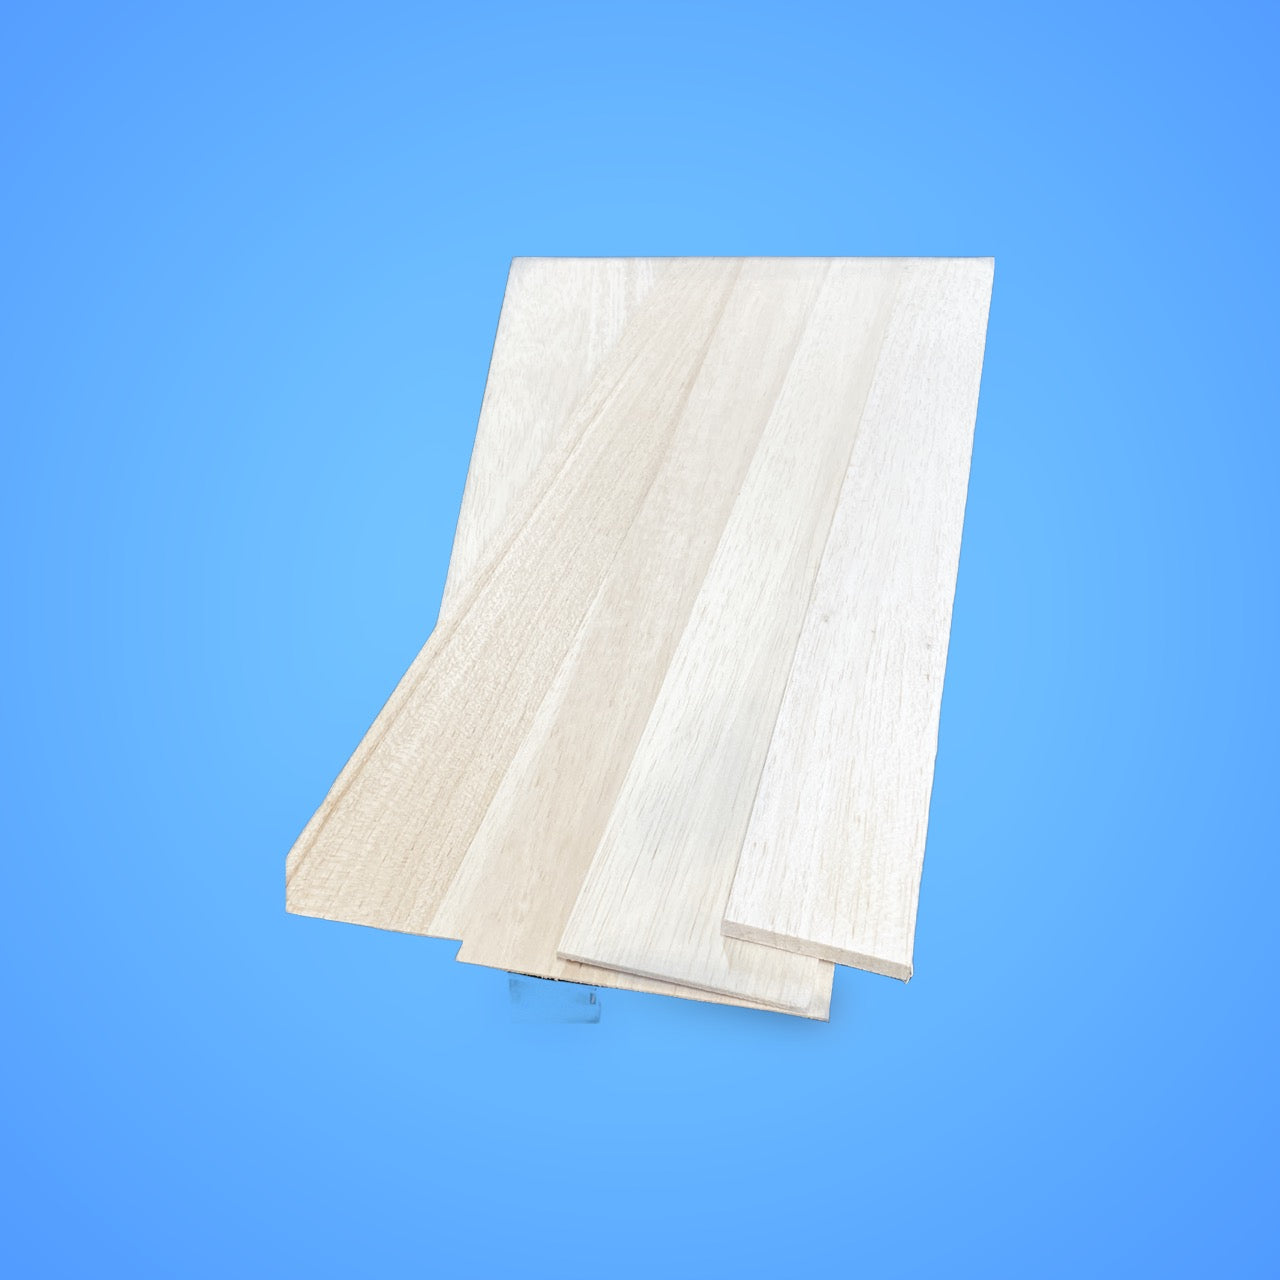 1/4 x 3 x 36 Aero Light Balsa Wood Sheets